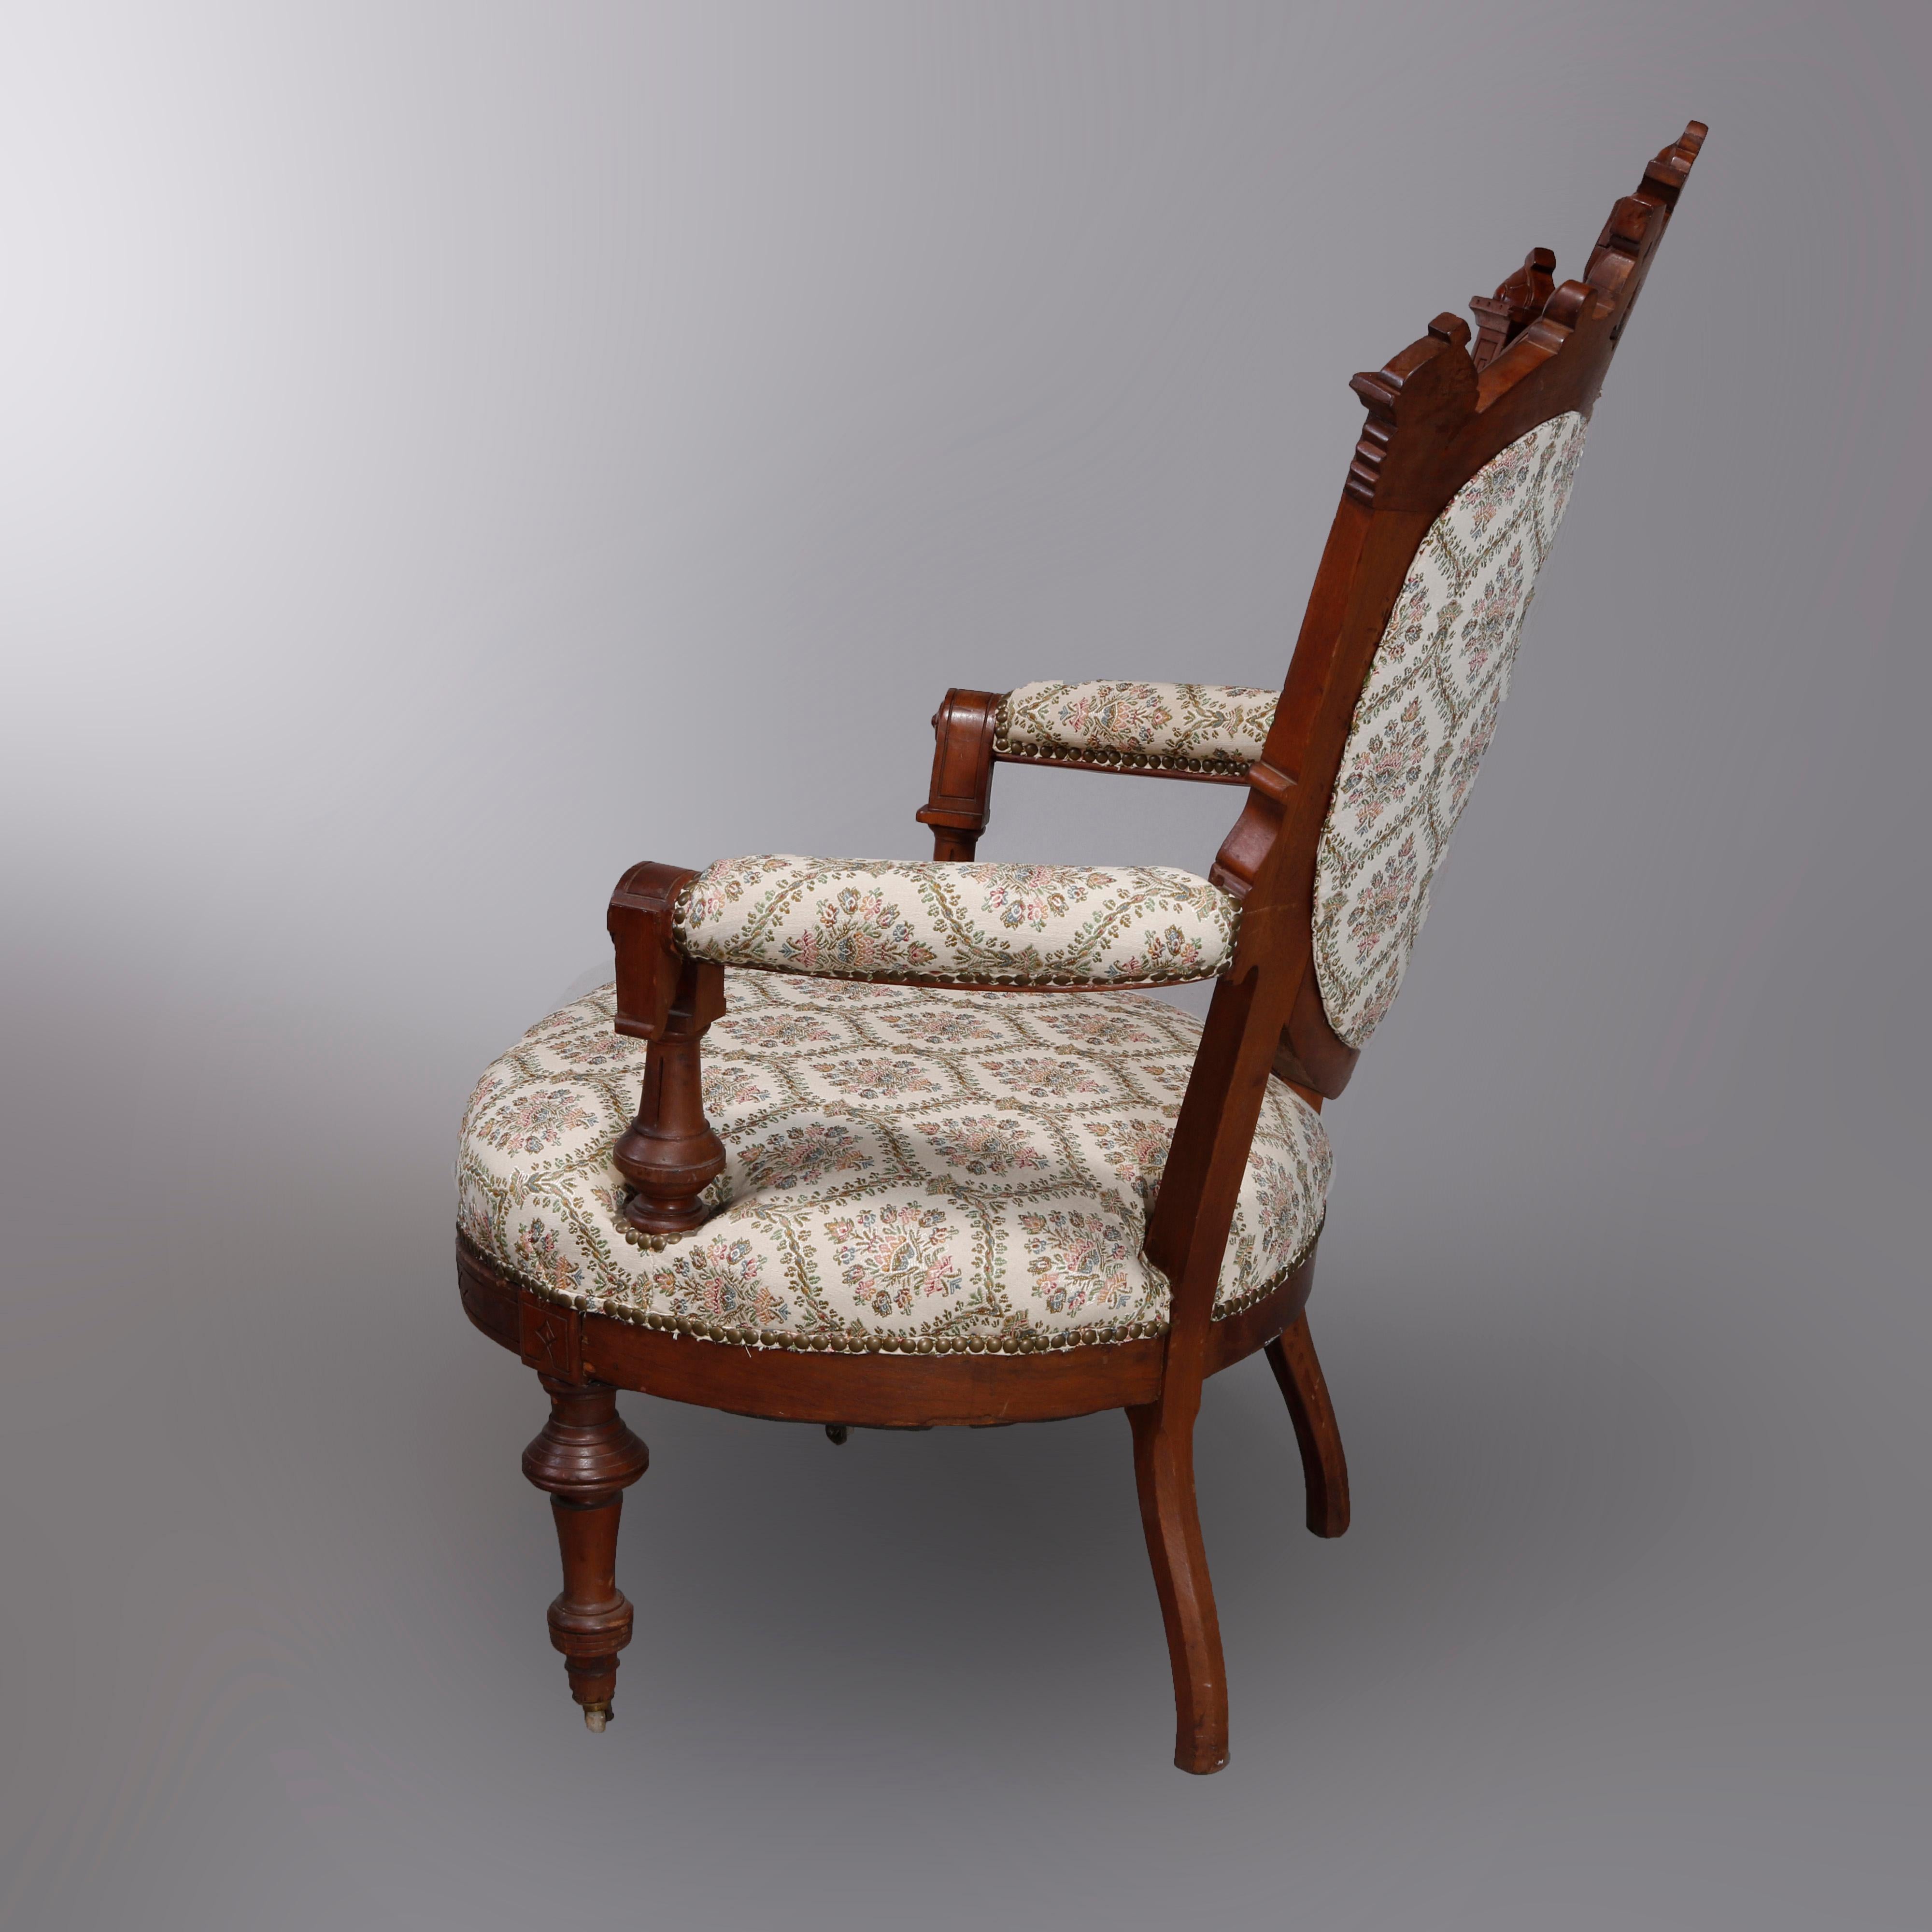 Antique Renaissance Revival Walnut & Burl Parlor Armchairs with Marquetry, c1880 For Sale 4